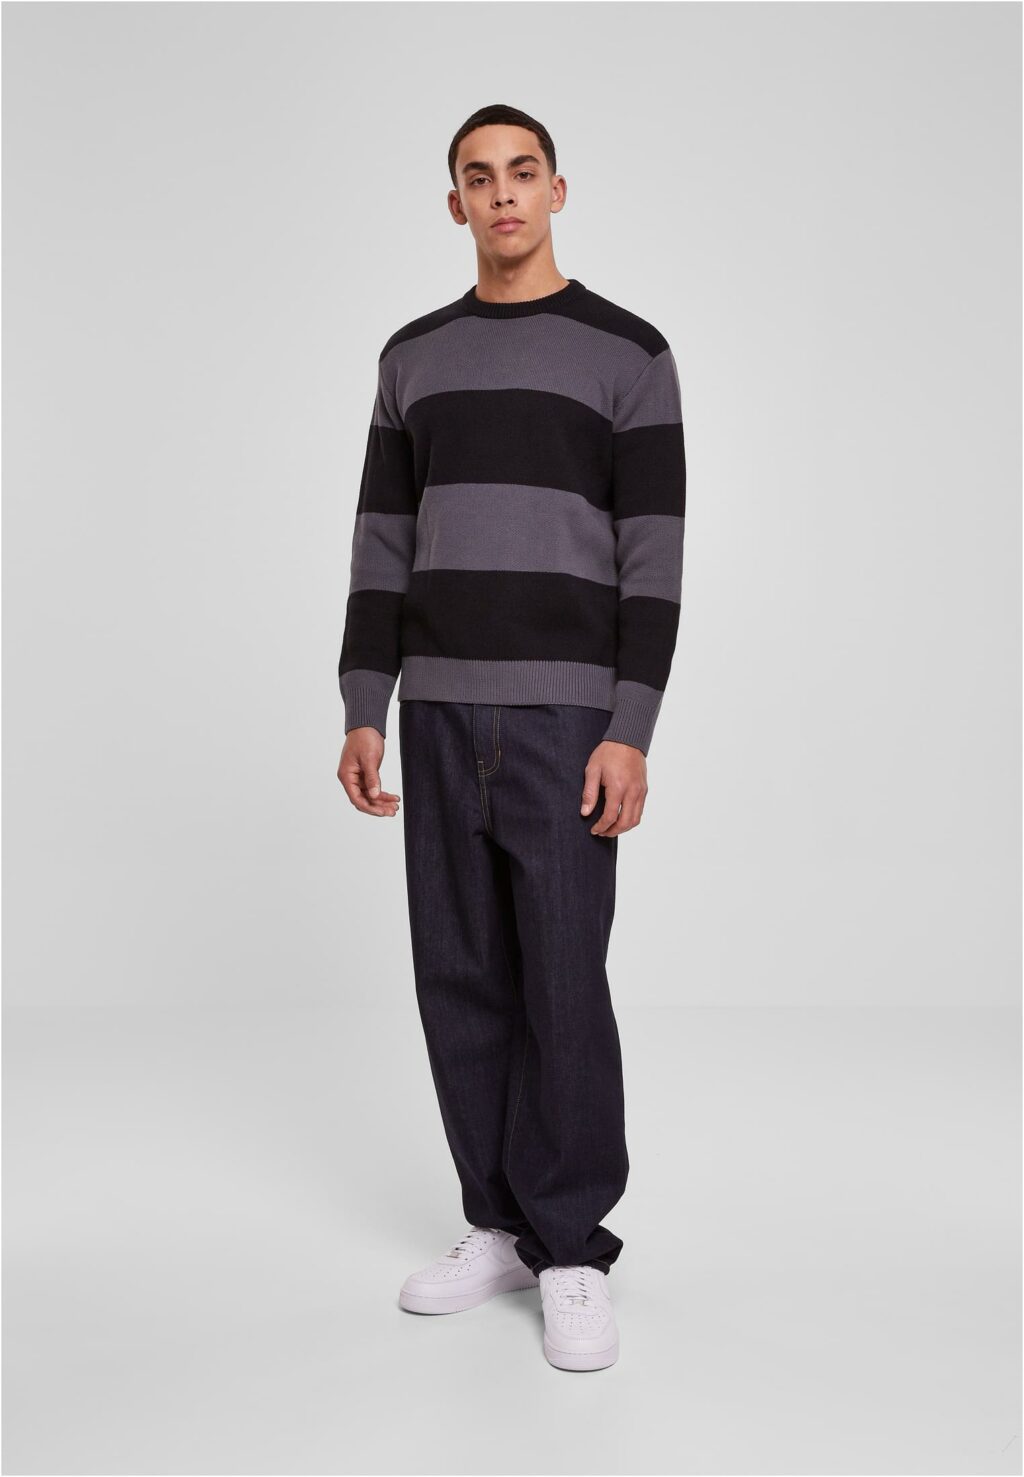 Urban Classics Heavy Oversized Striped Sweatshirt black/darkshadow TB6342